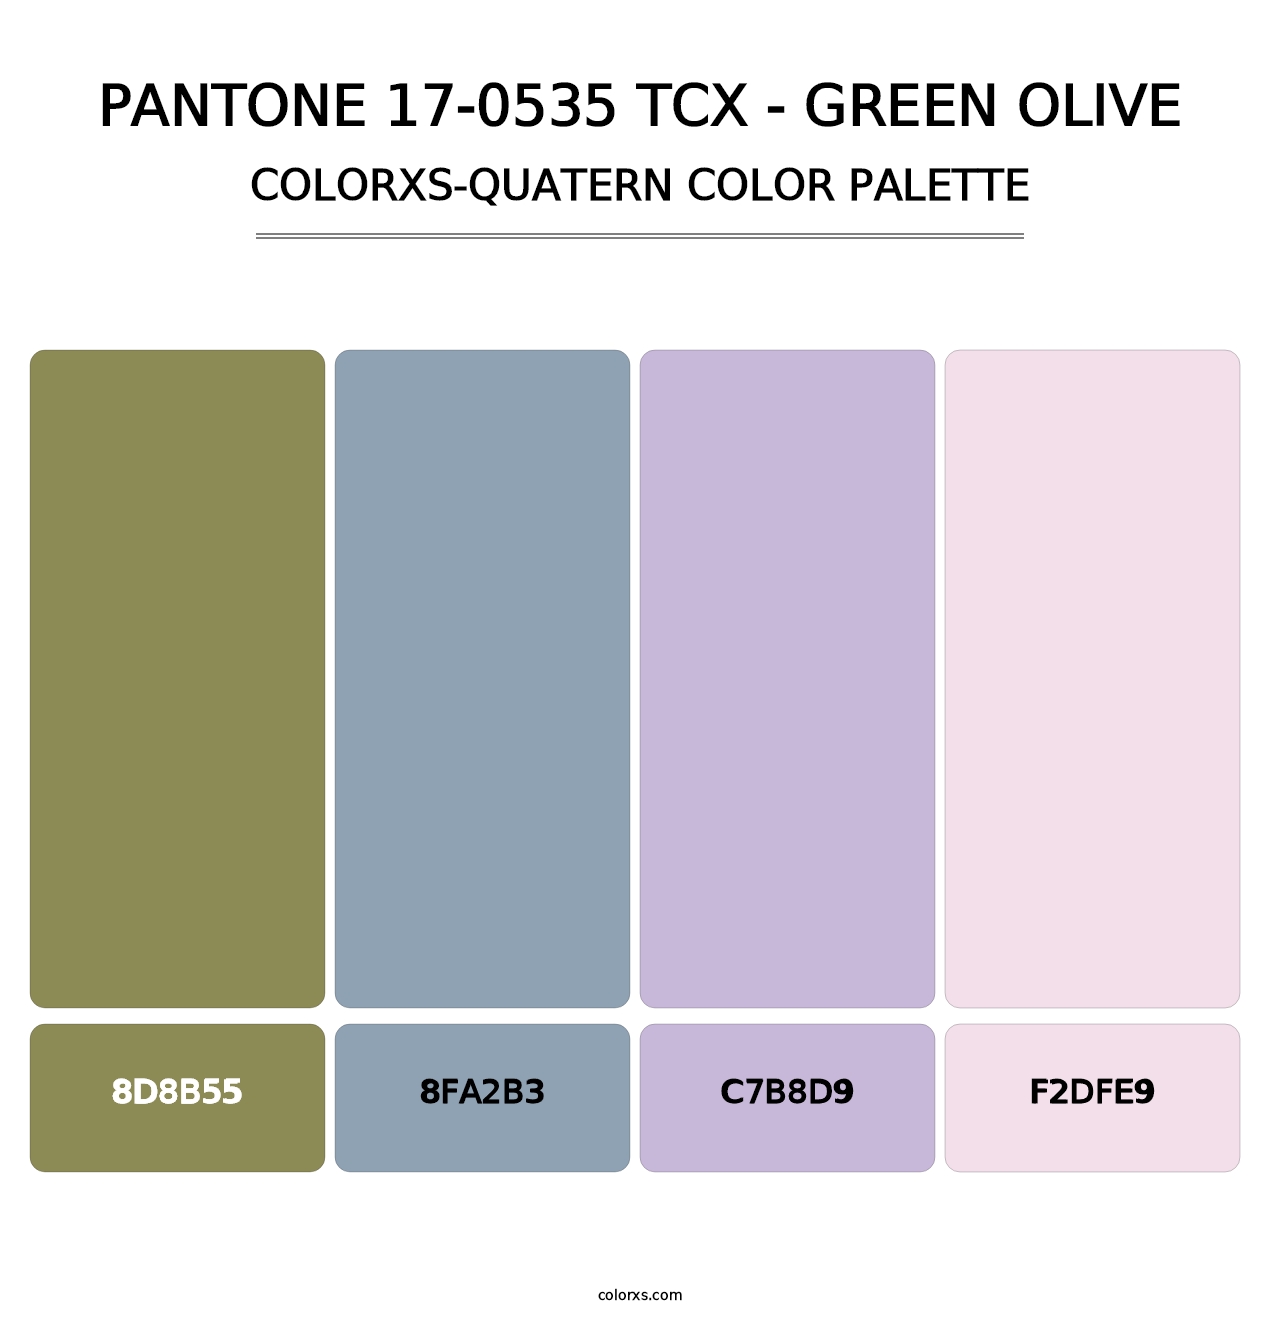 PANTONE 17-0535 TCX - Green Olive - Colorxs Quatern Palette